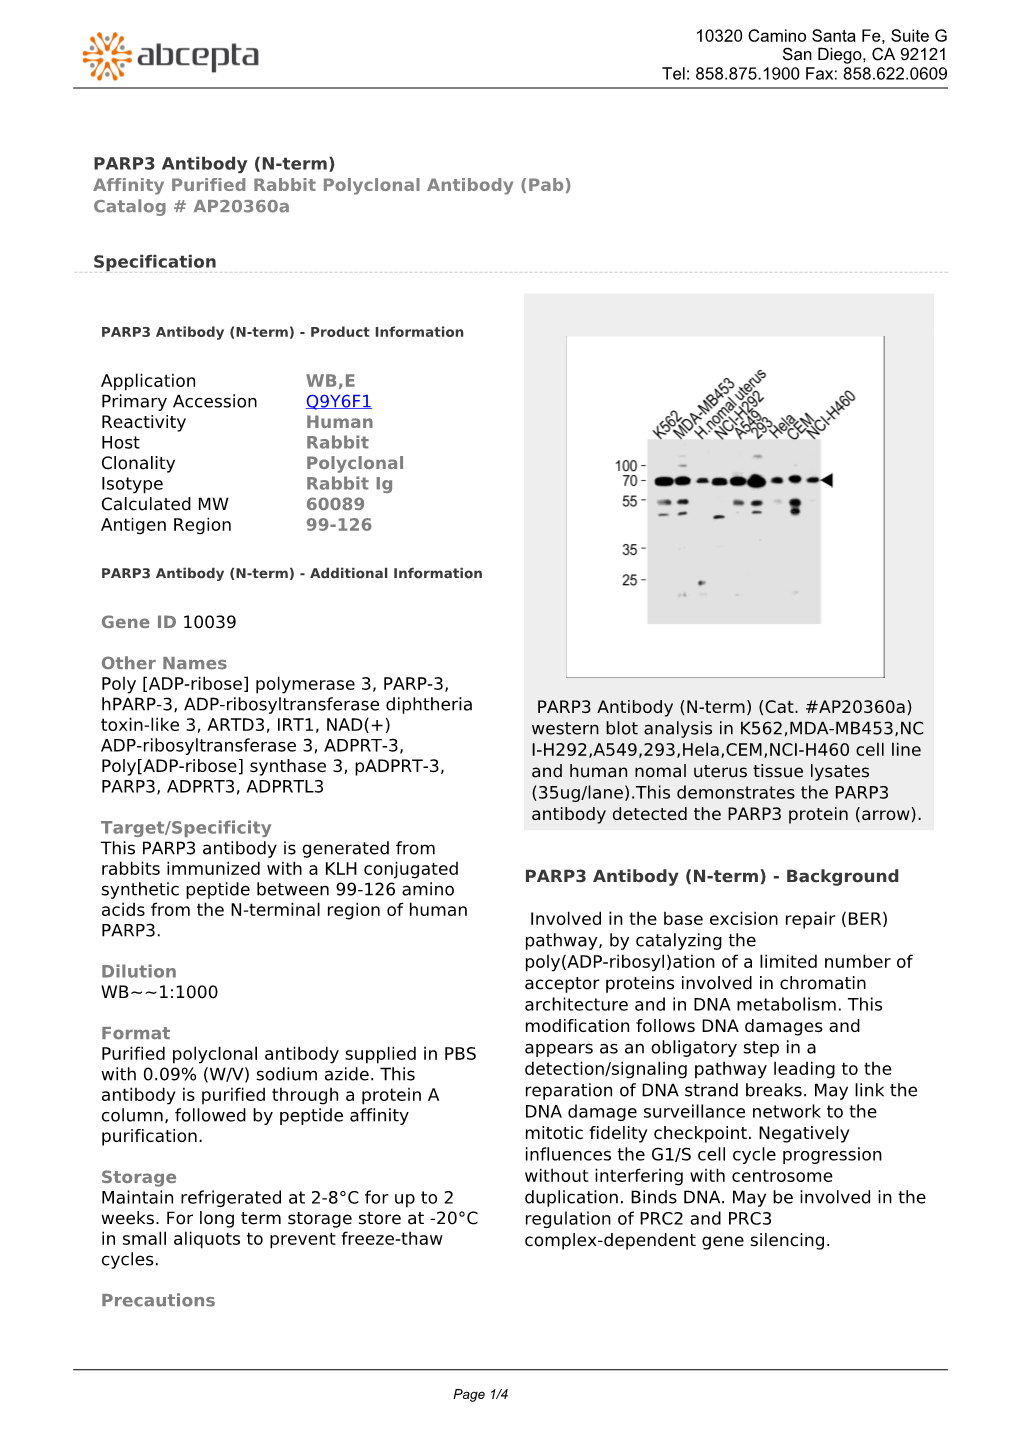 PARP3 Antibody (N-Term) Affinity Purified Rabbit Polyclonal Antibody (Pab) Catalog # Ap20360a